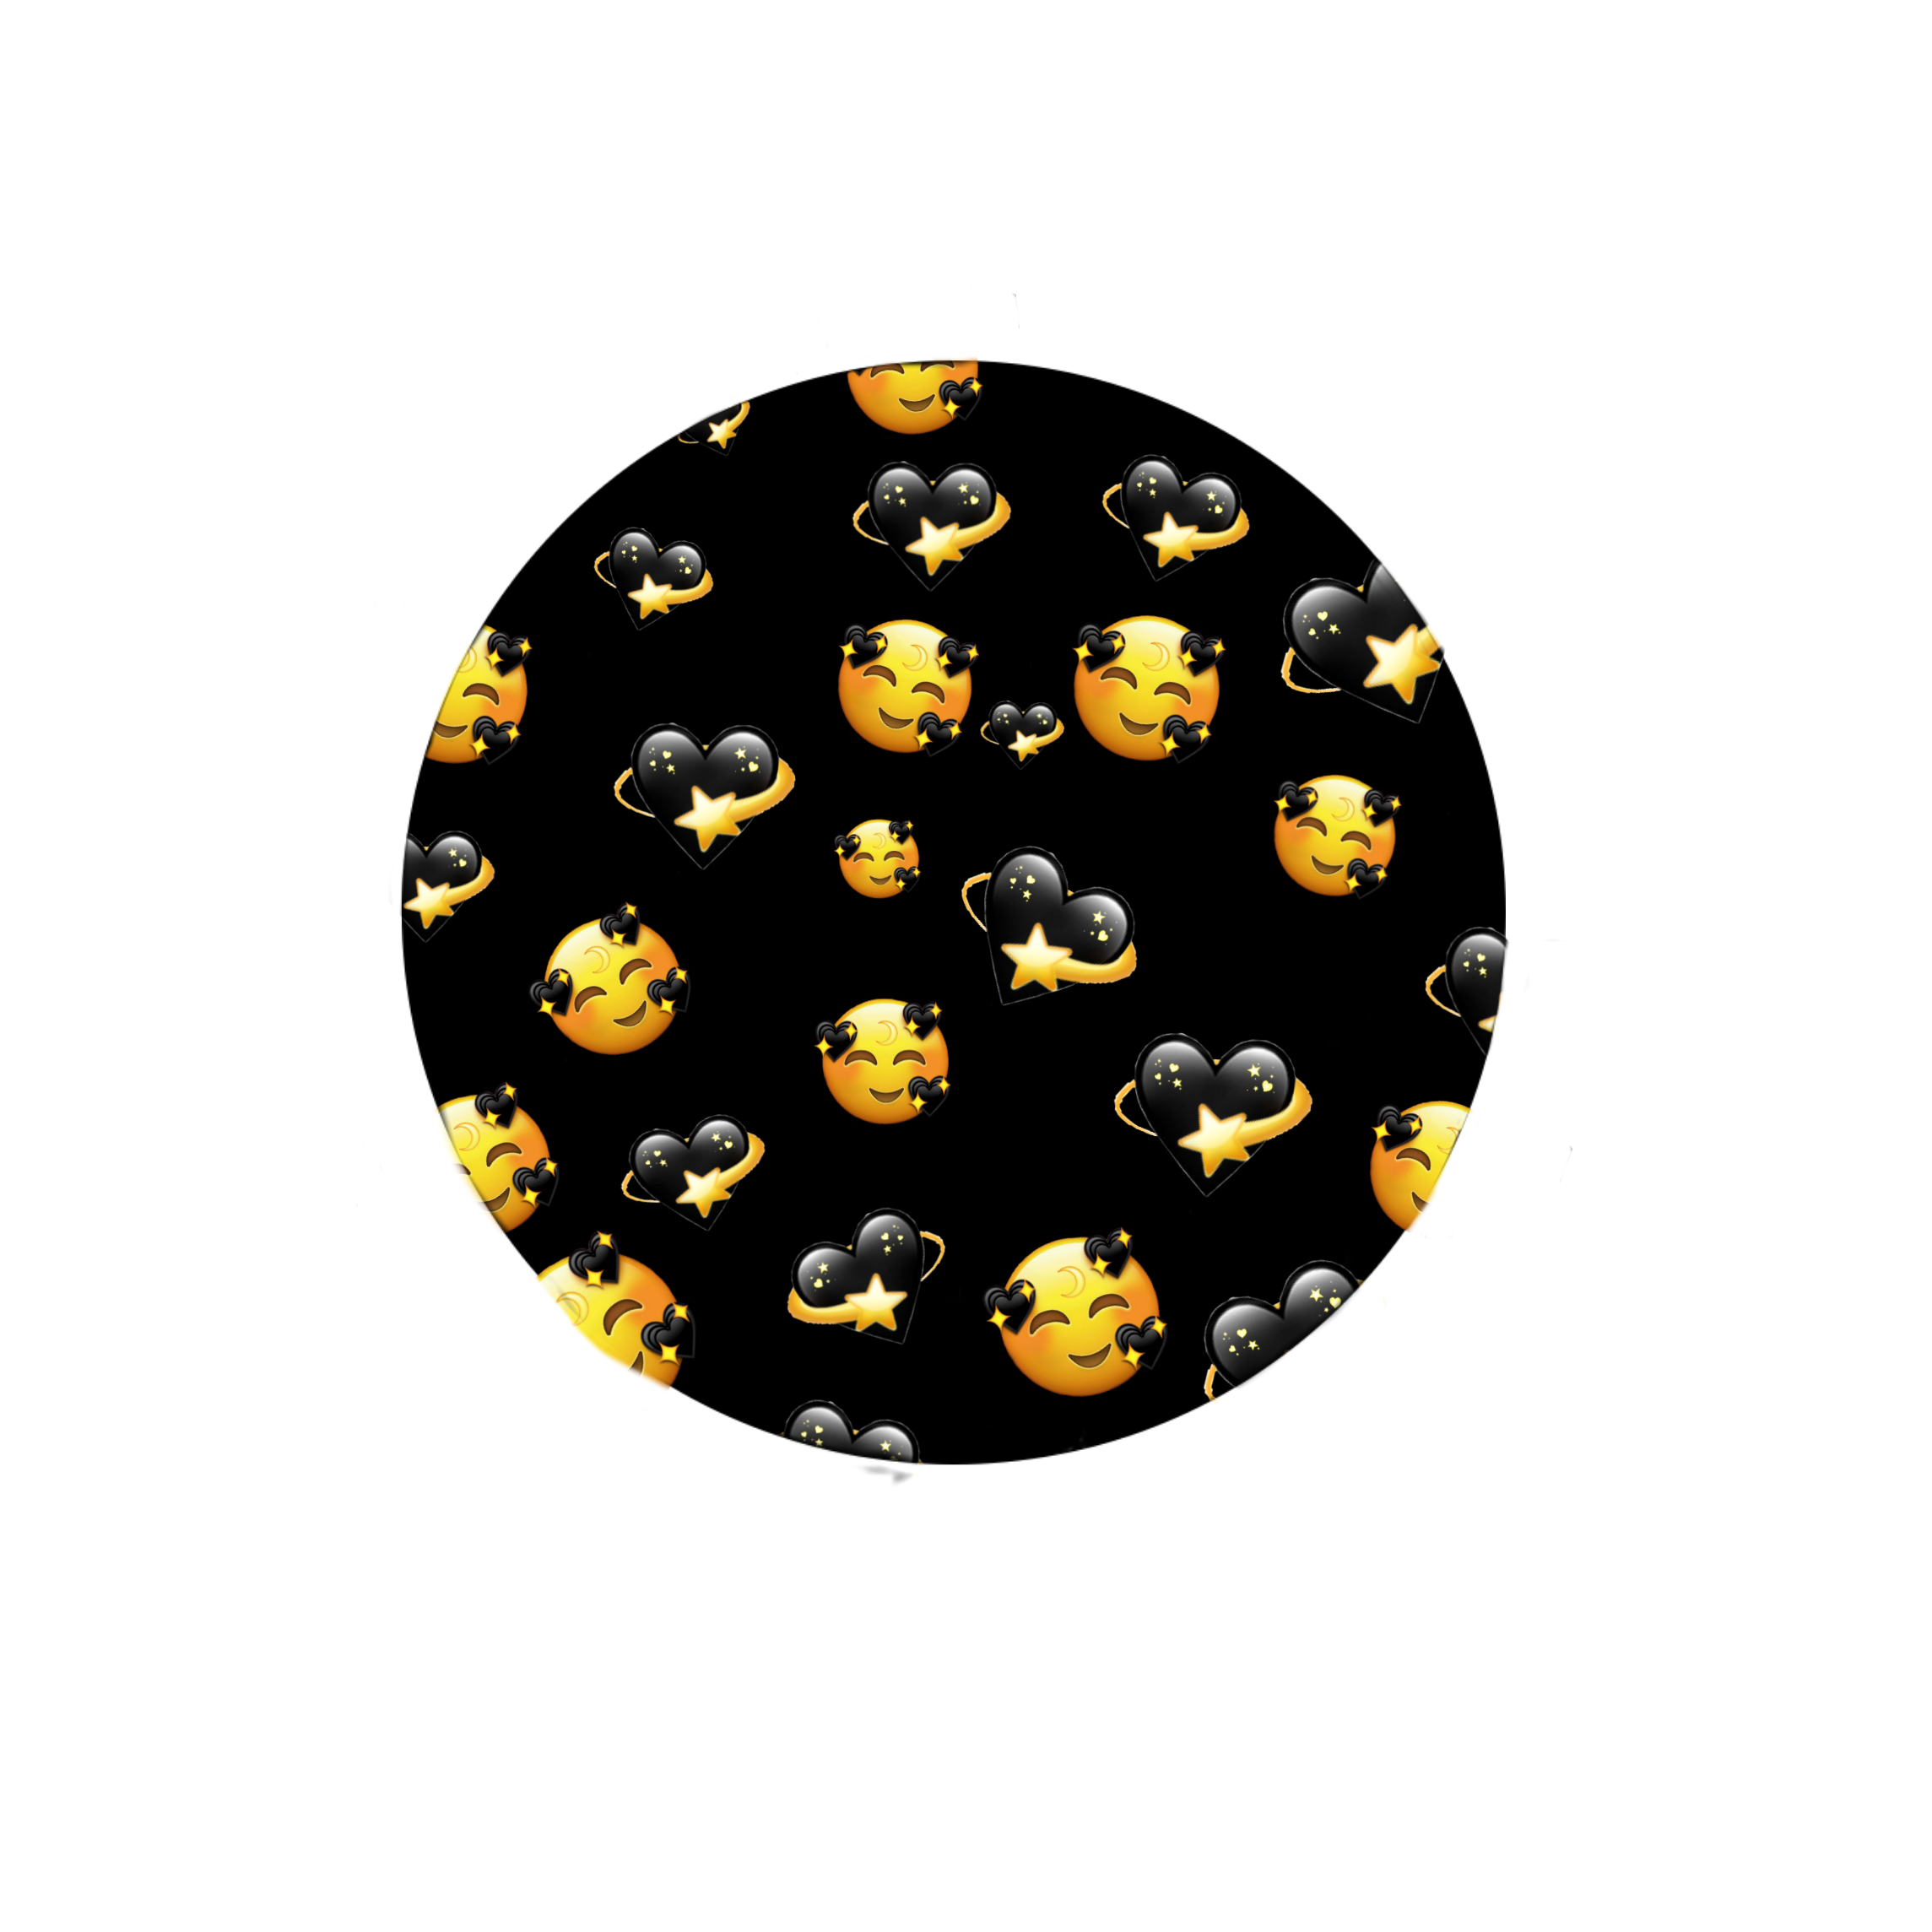 wallpaper #black #emoji #tumblr #beautiful - Bee - 2289x2289 Wallpaper -  